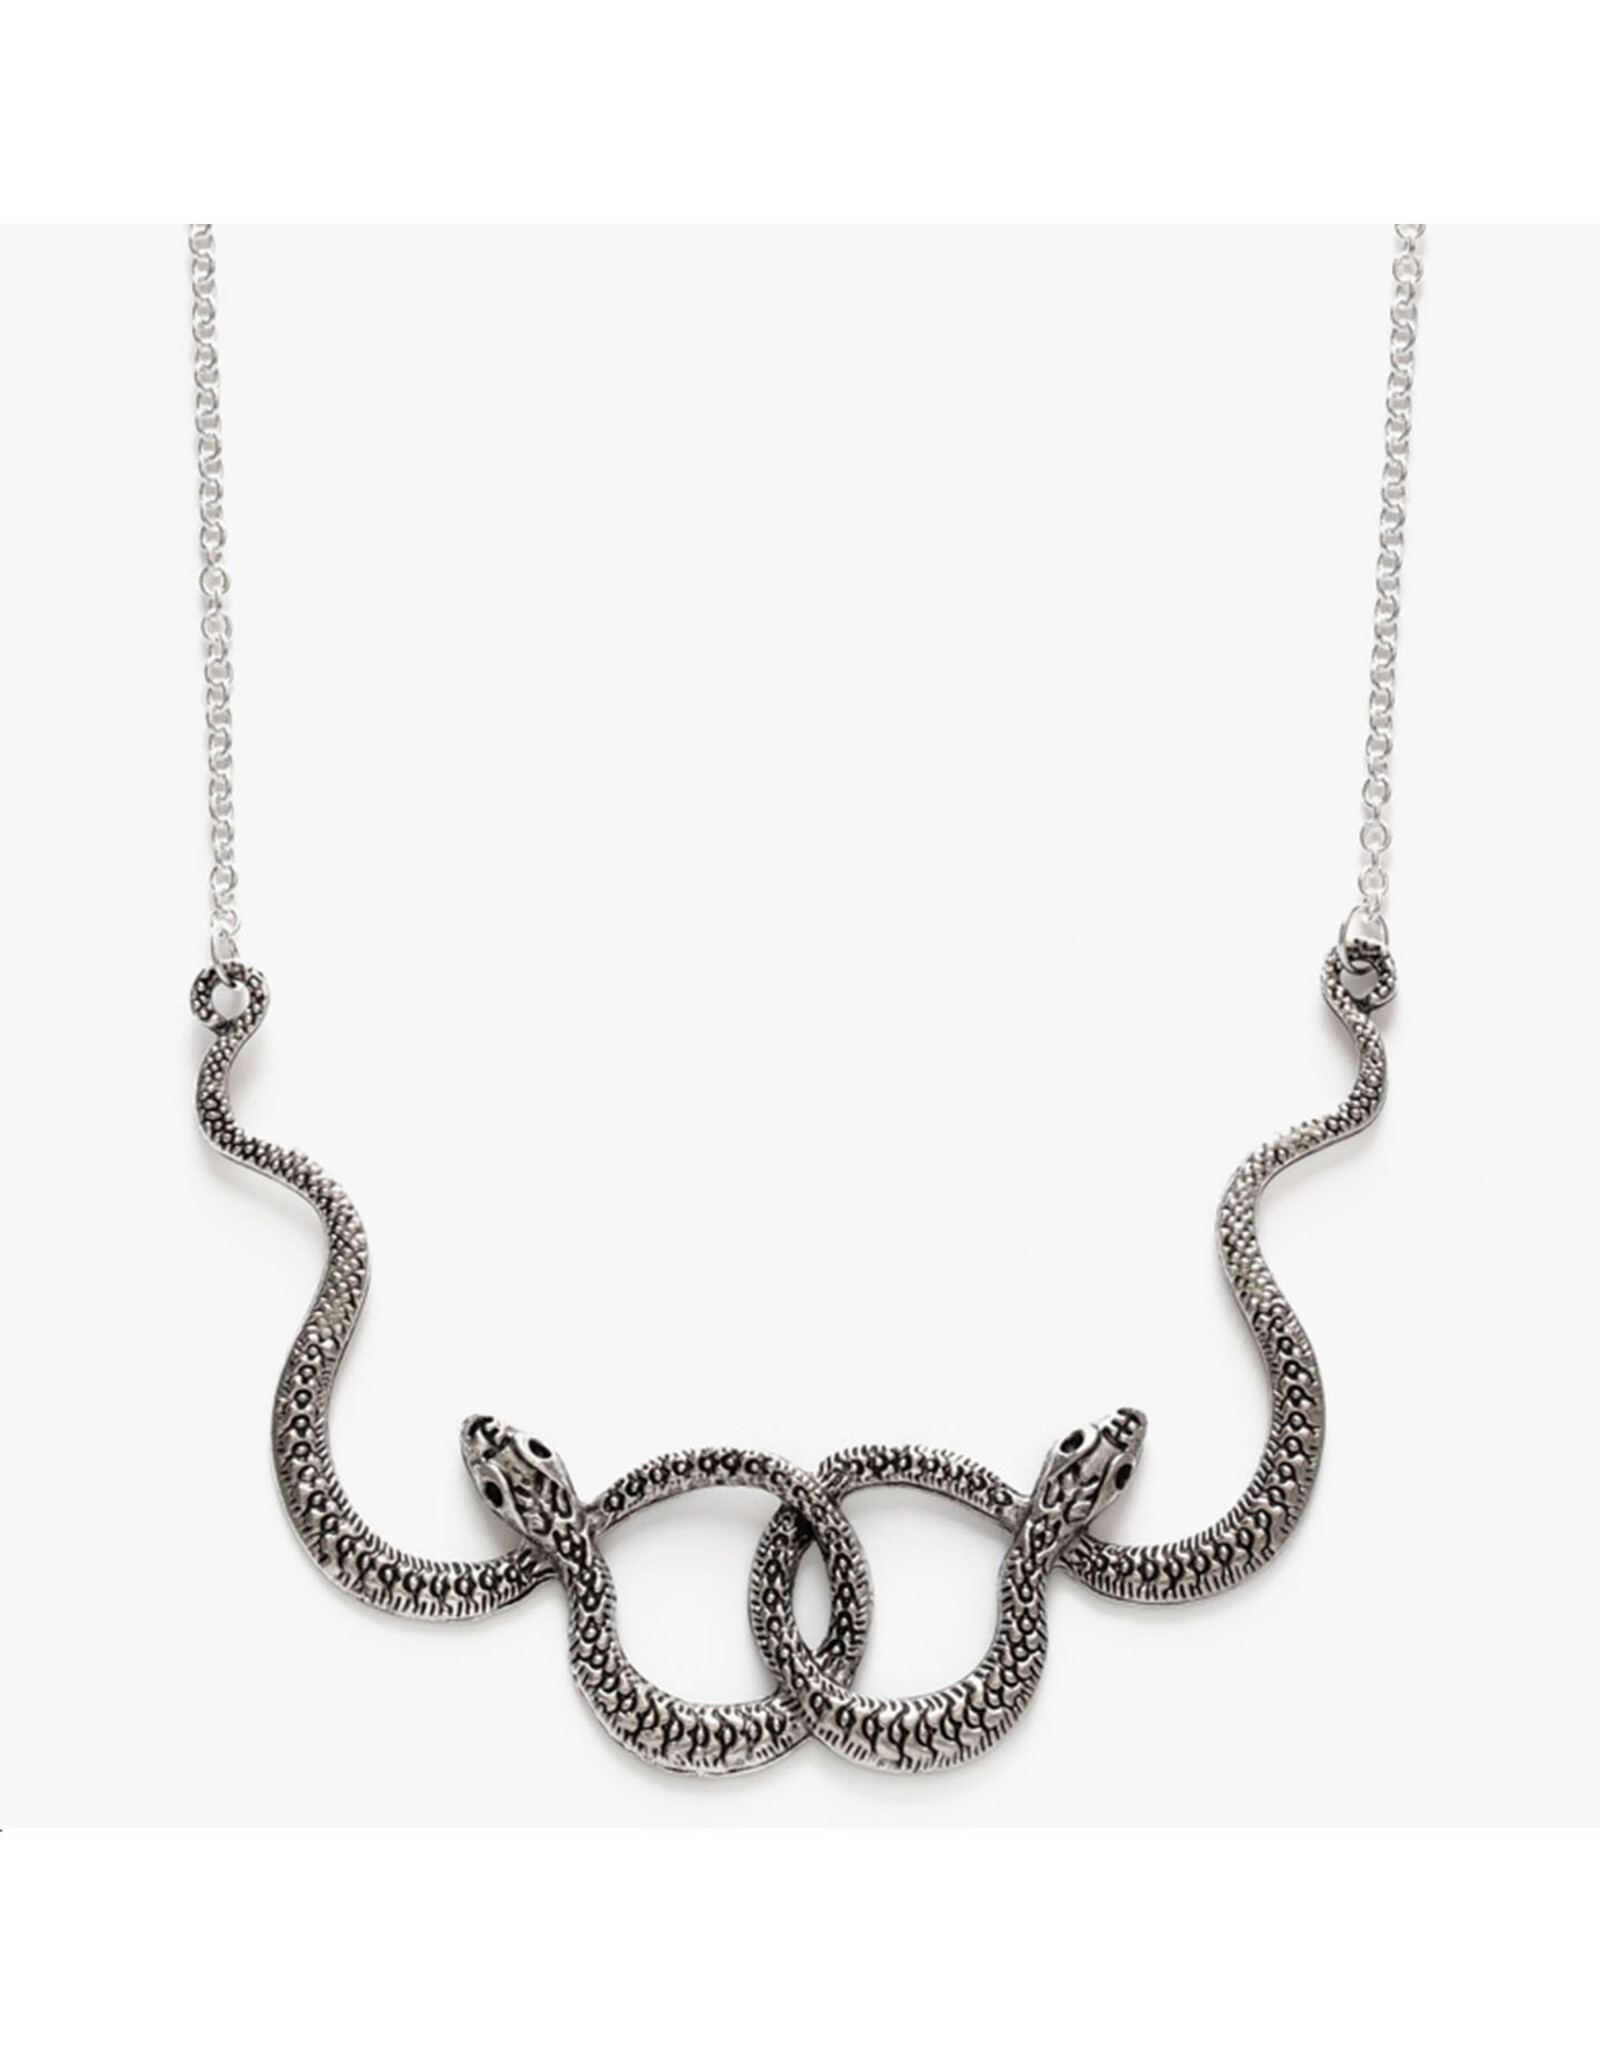 Ophidian Snake Necklace - Silver